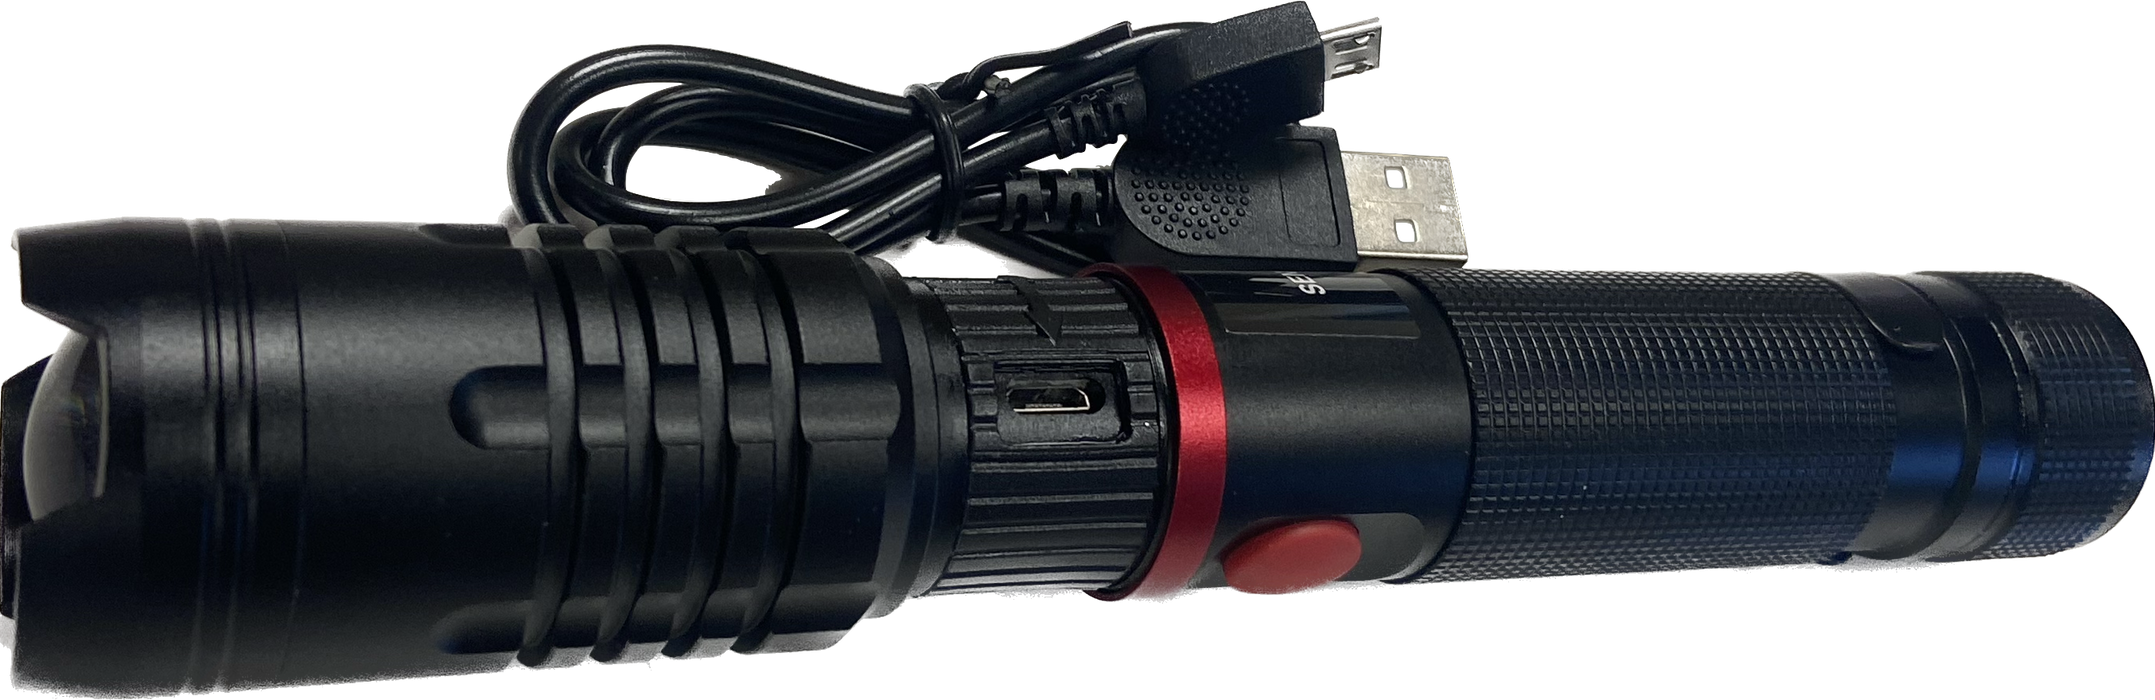 TOOL090 Rechargeable Flashlight / Powerbank